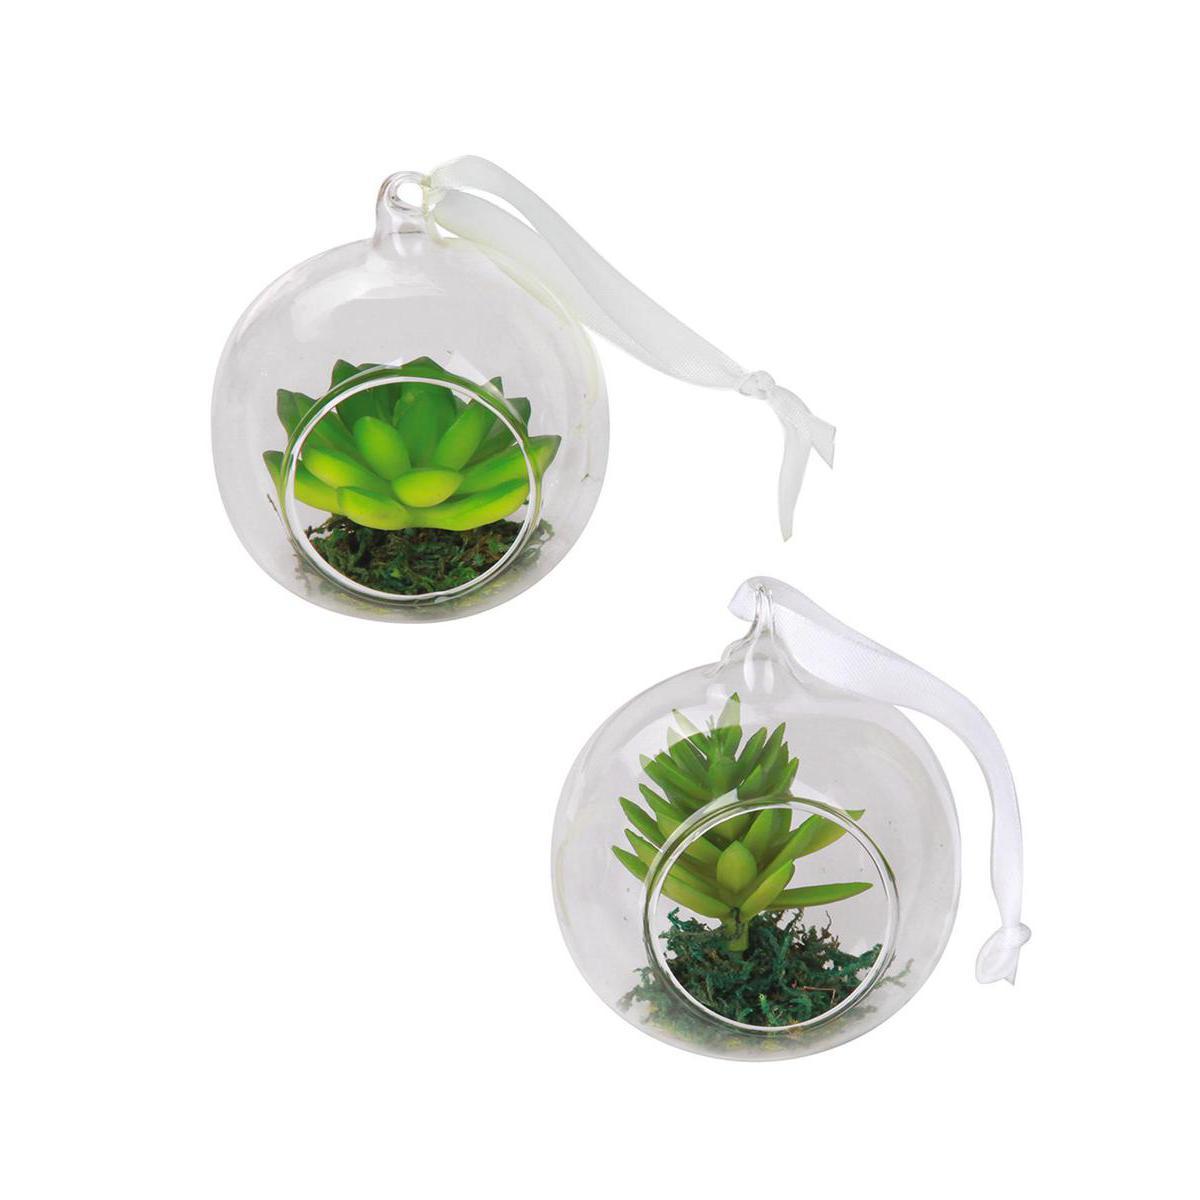 Boule à suspendre et succulente -  Verre, Plastique - Diam 8 cm - Blanc